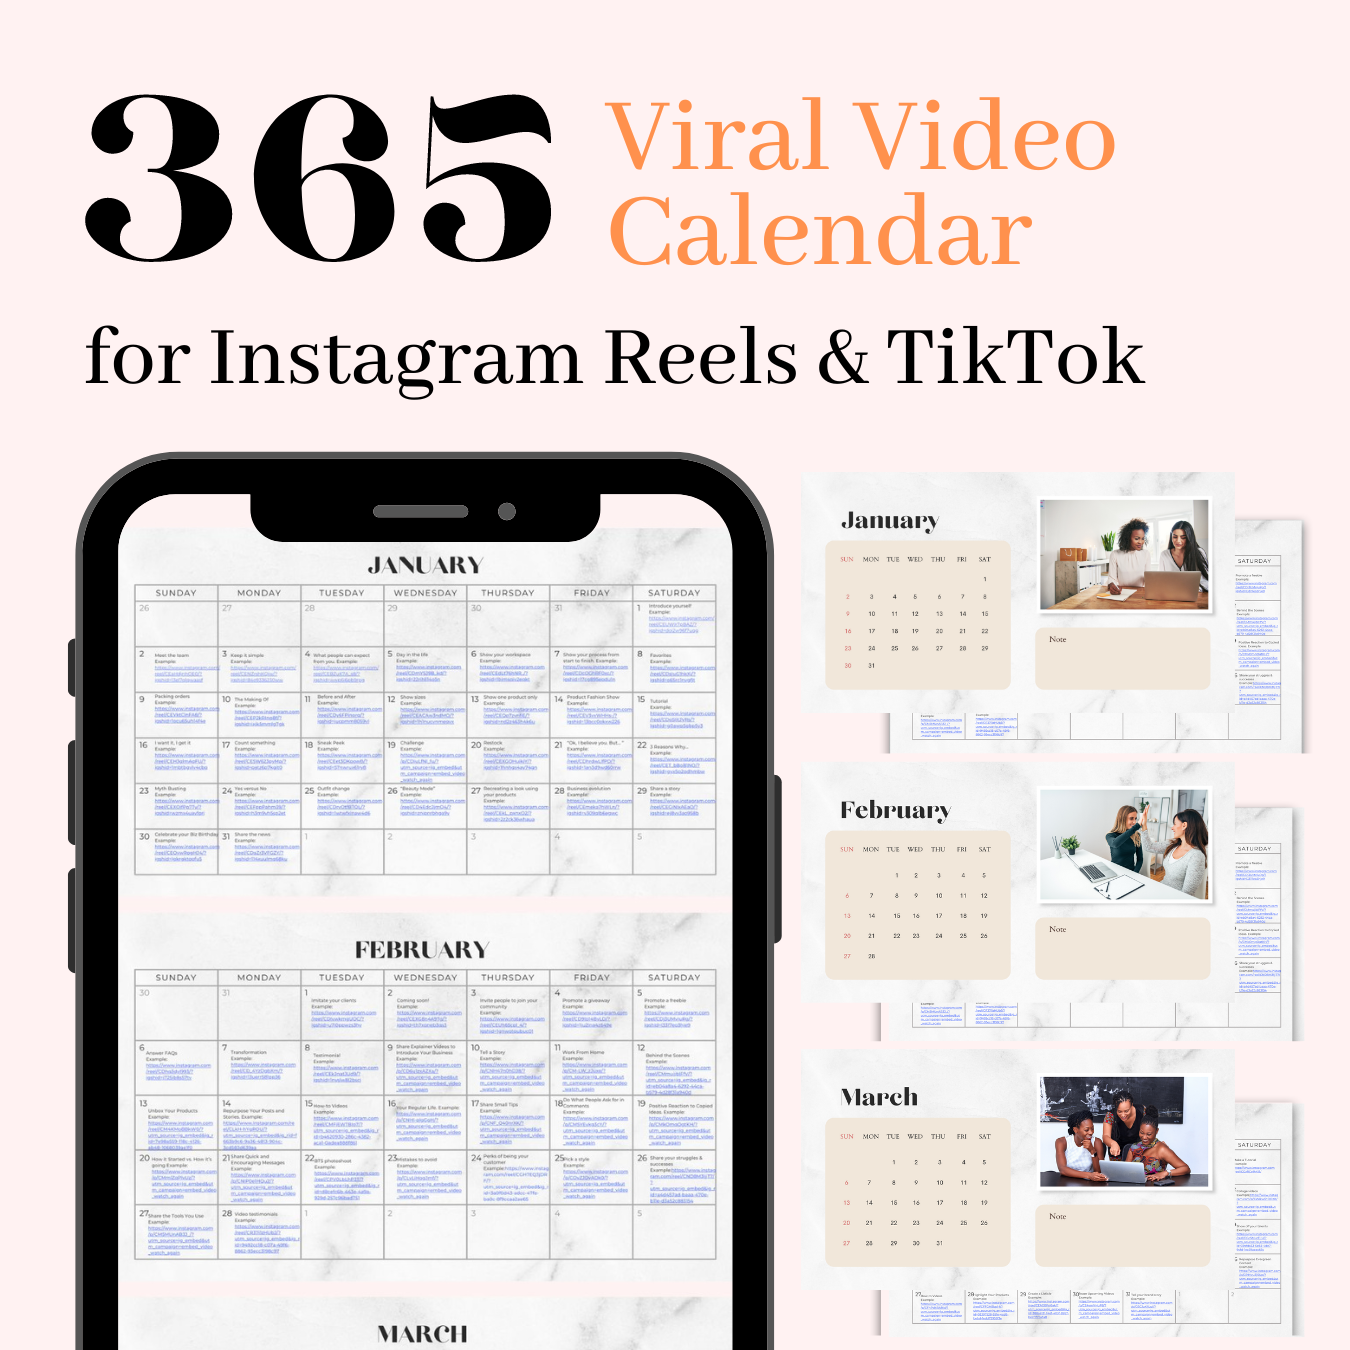 With Examples - 365 Viral Video Calendar For Instagram Reels & TikTok